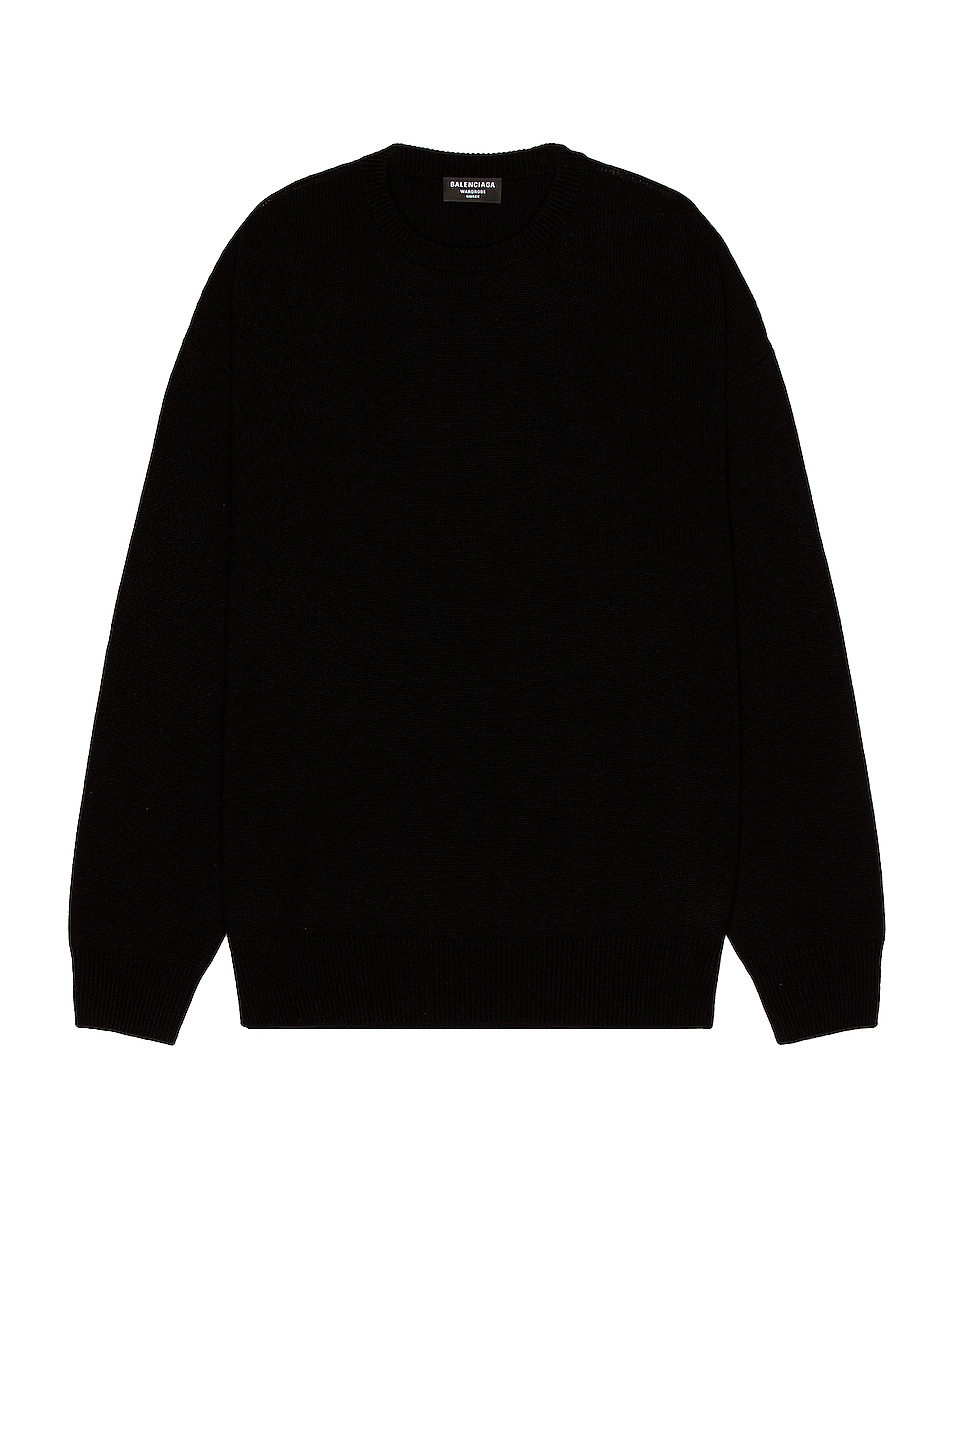 Balenciaga Cashmere Knit Sweater in Black | FWRD